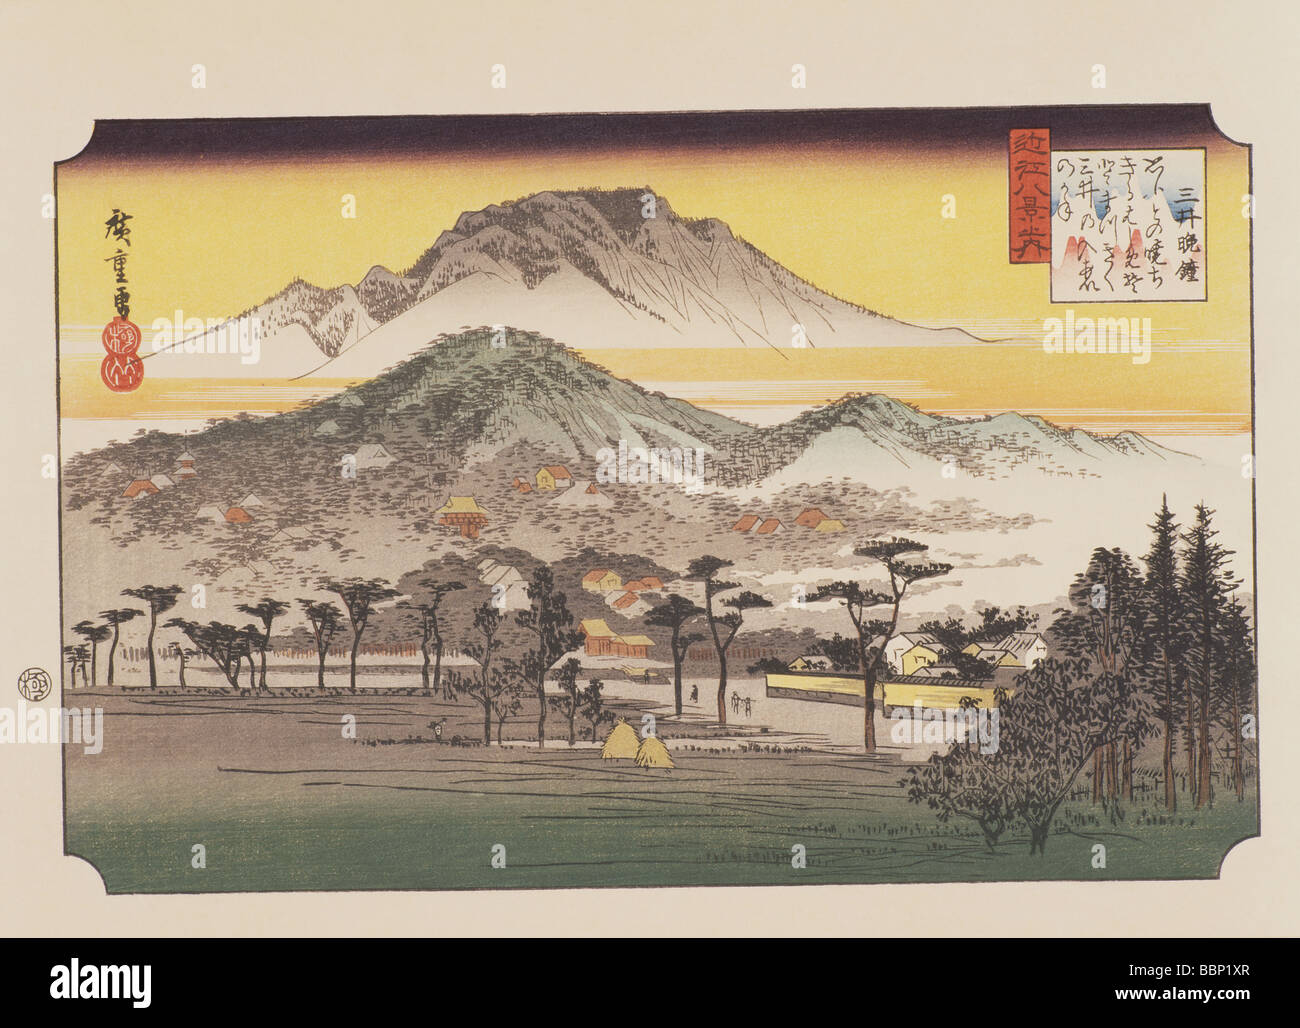 Utagawa Hiroshige, Eight Views of Omi, The evening gong at Mii, Stock Photo